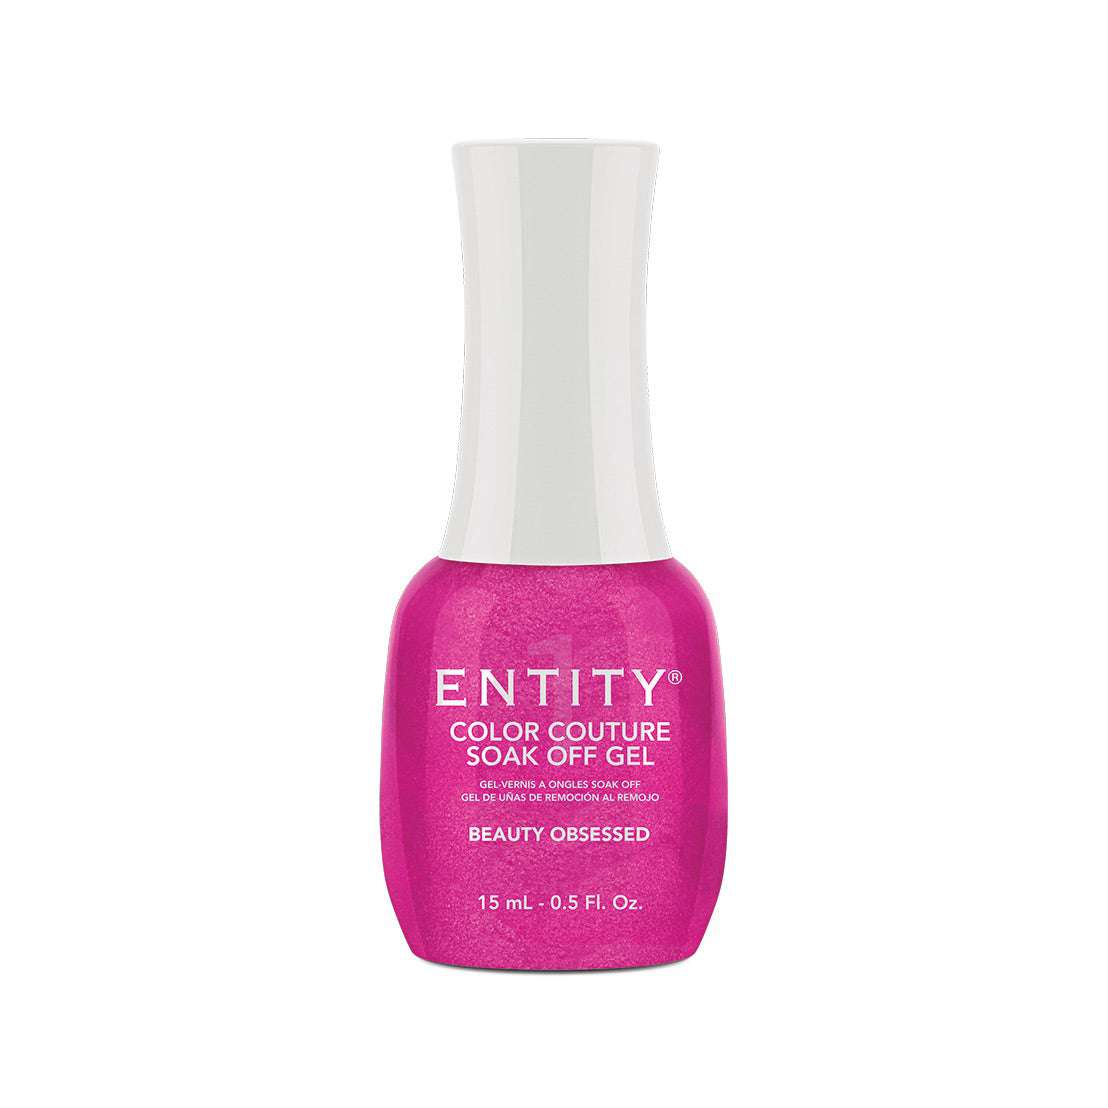 Entity Gel Soak Off - Beauty Obsessed 15 mL/0.5 Fl. Oz